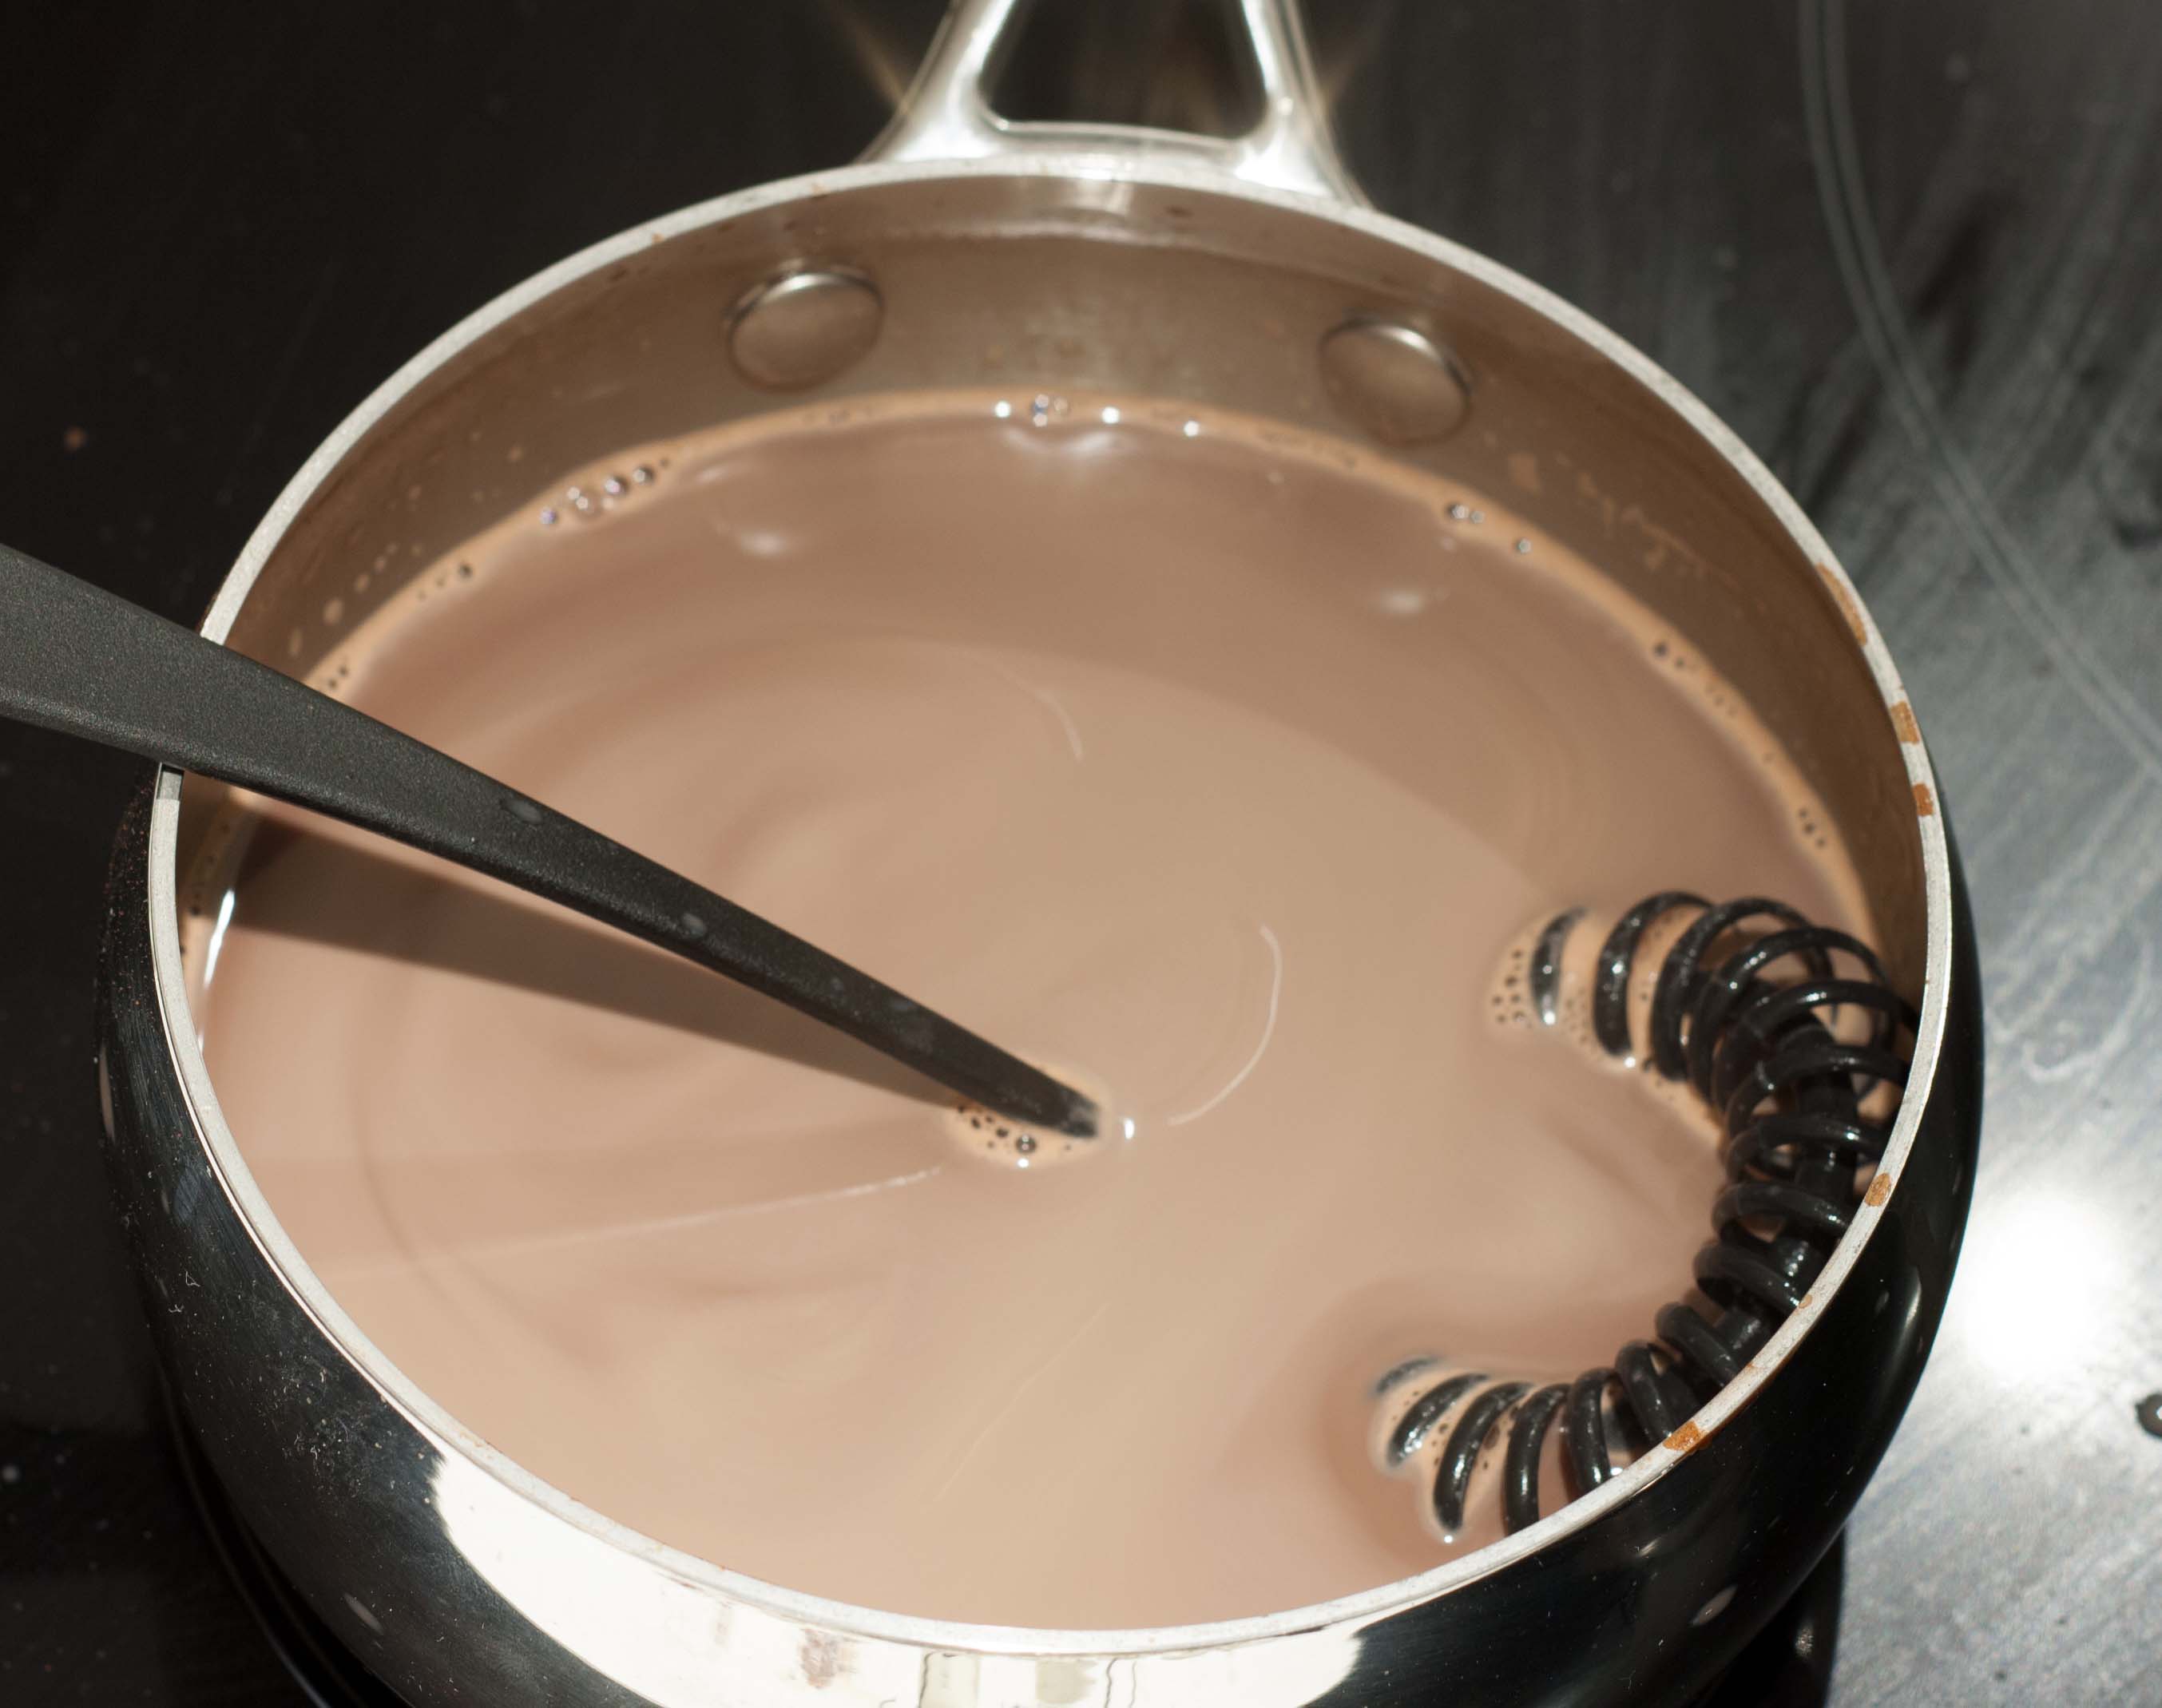 Opskrift på Nem hjemmelavet varm kakao med mælkeskum